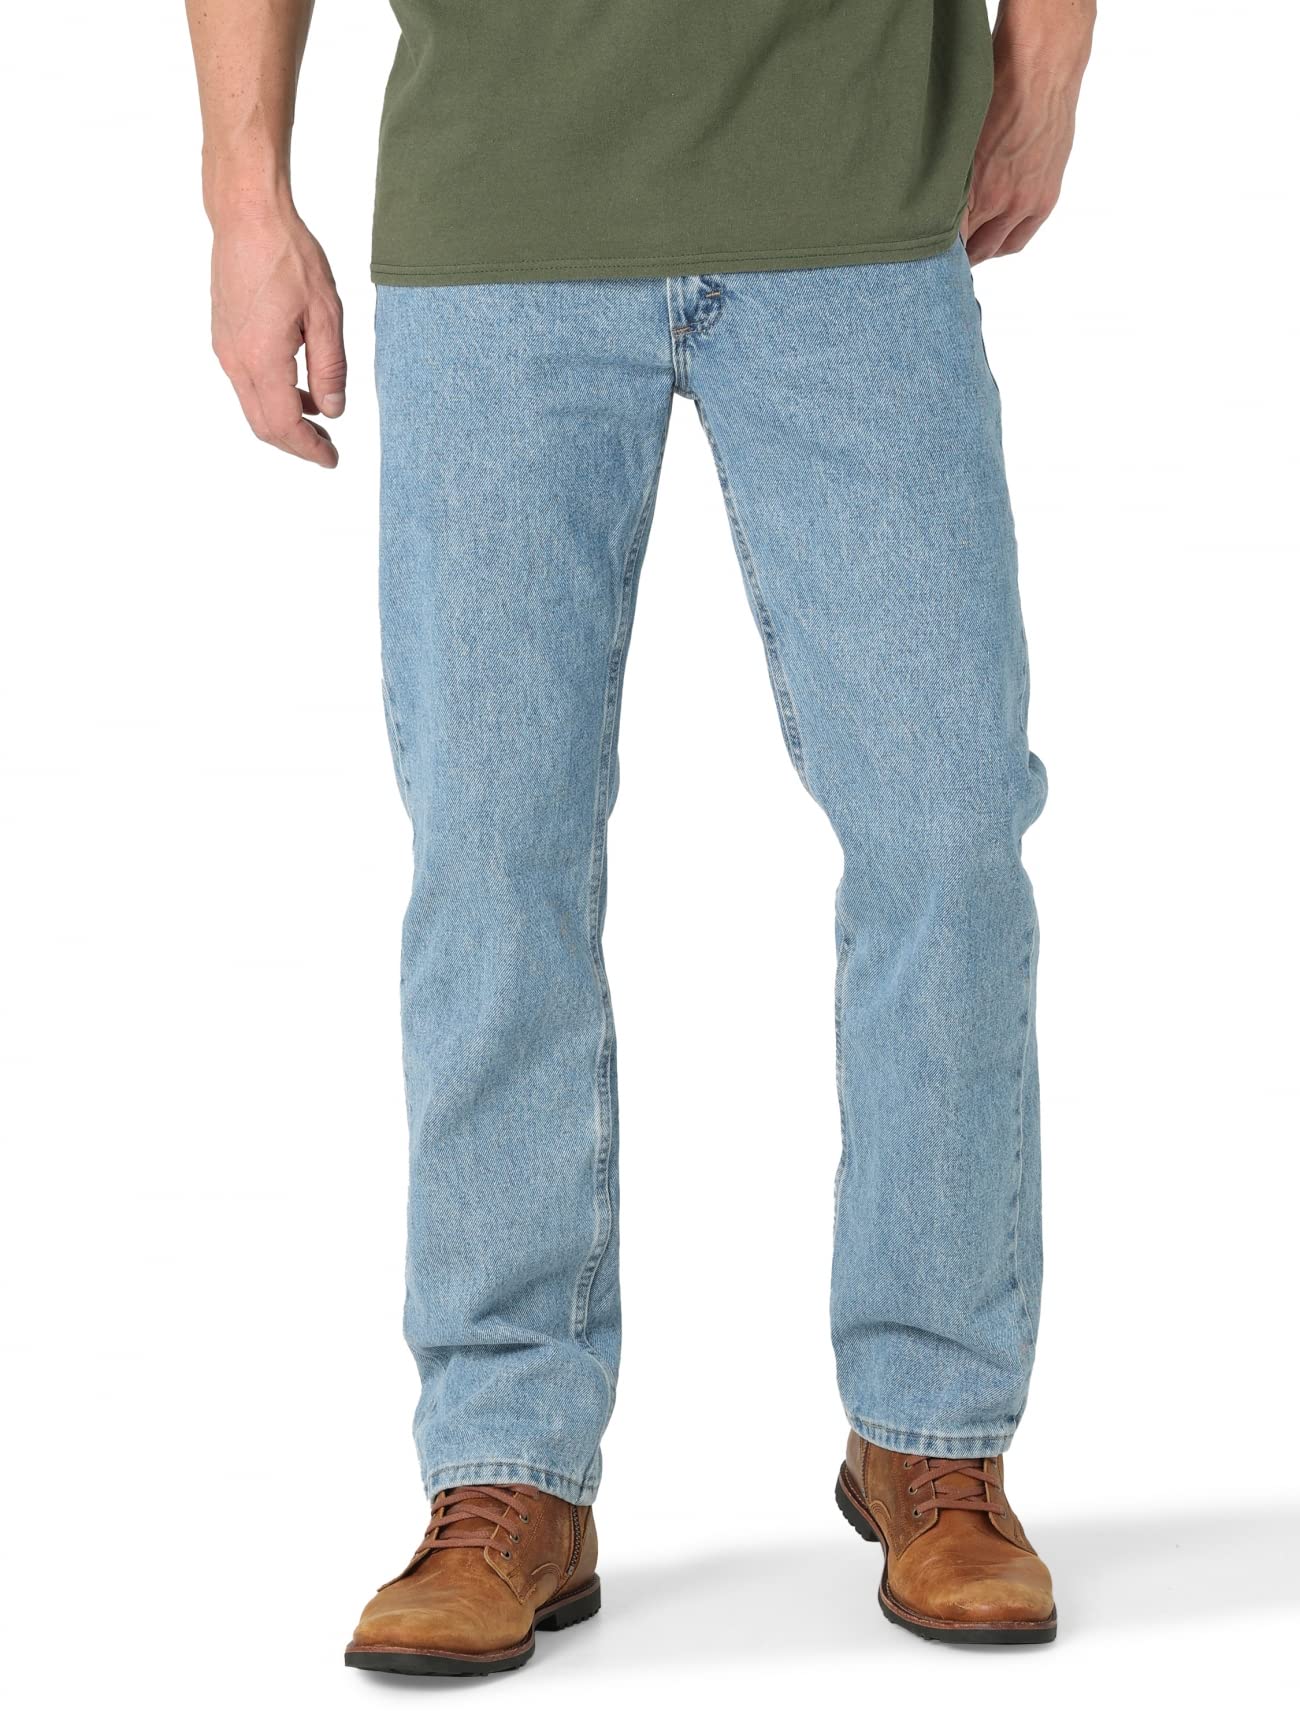 Wrangler Authentics Men's Classic 5-Pocket Regular Fit Cotton Jean, Light Stonewash, 33W x 32L